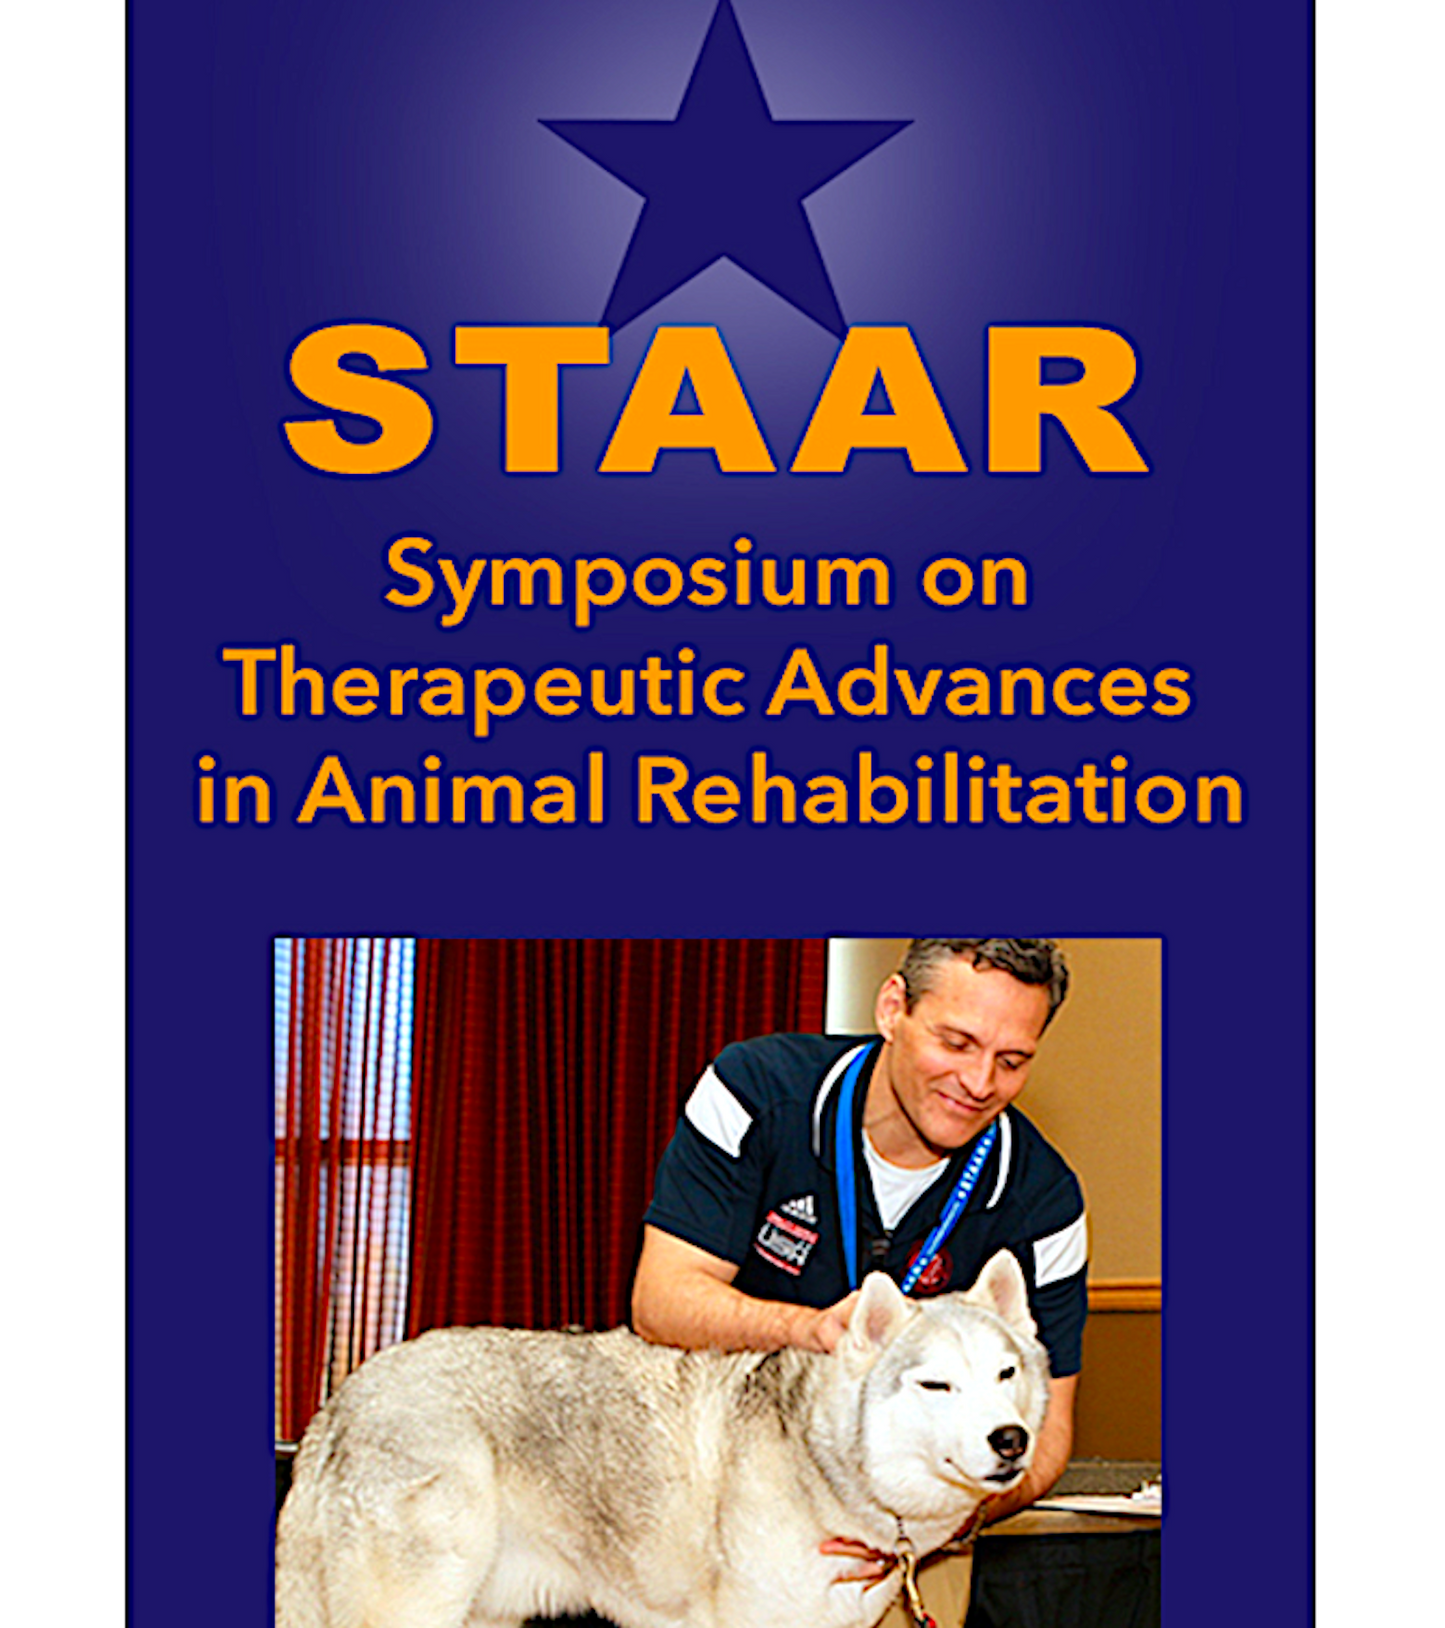 STAAR: Symposium on Therapeutic Advances in Animal Rehabilitation